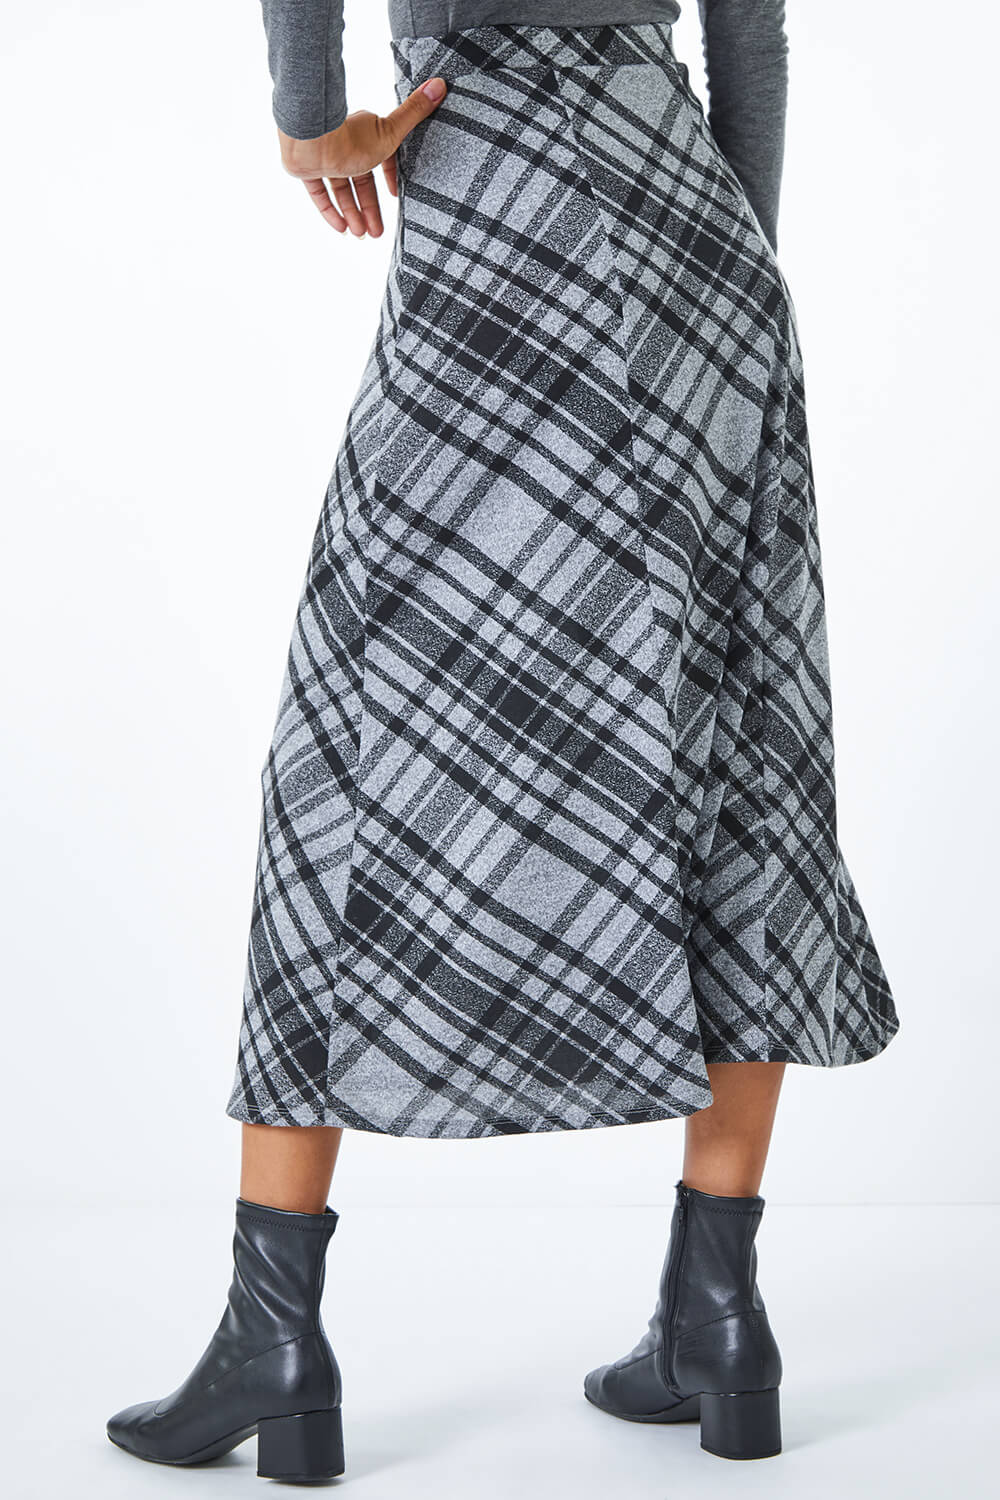 Check Print Stretch Skirt in Grey - Roman Originals UK